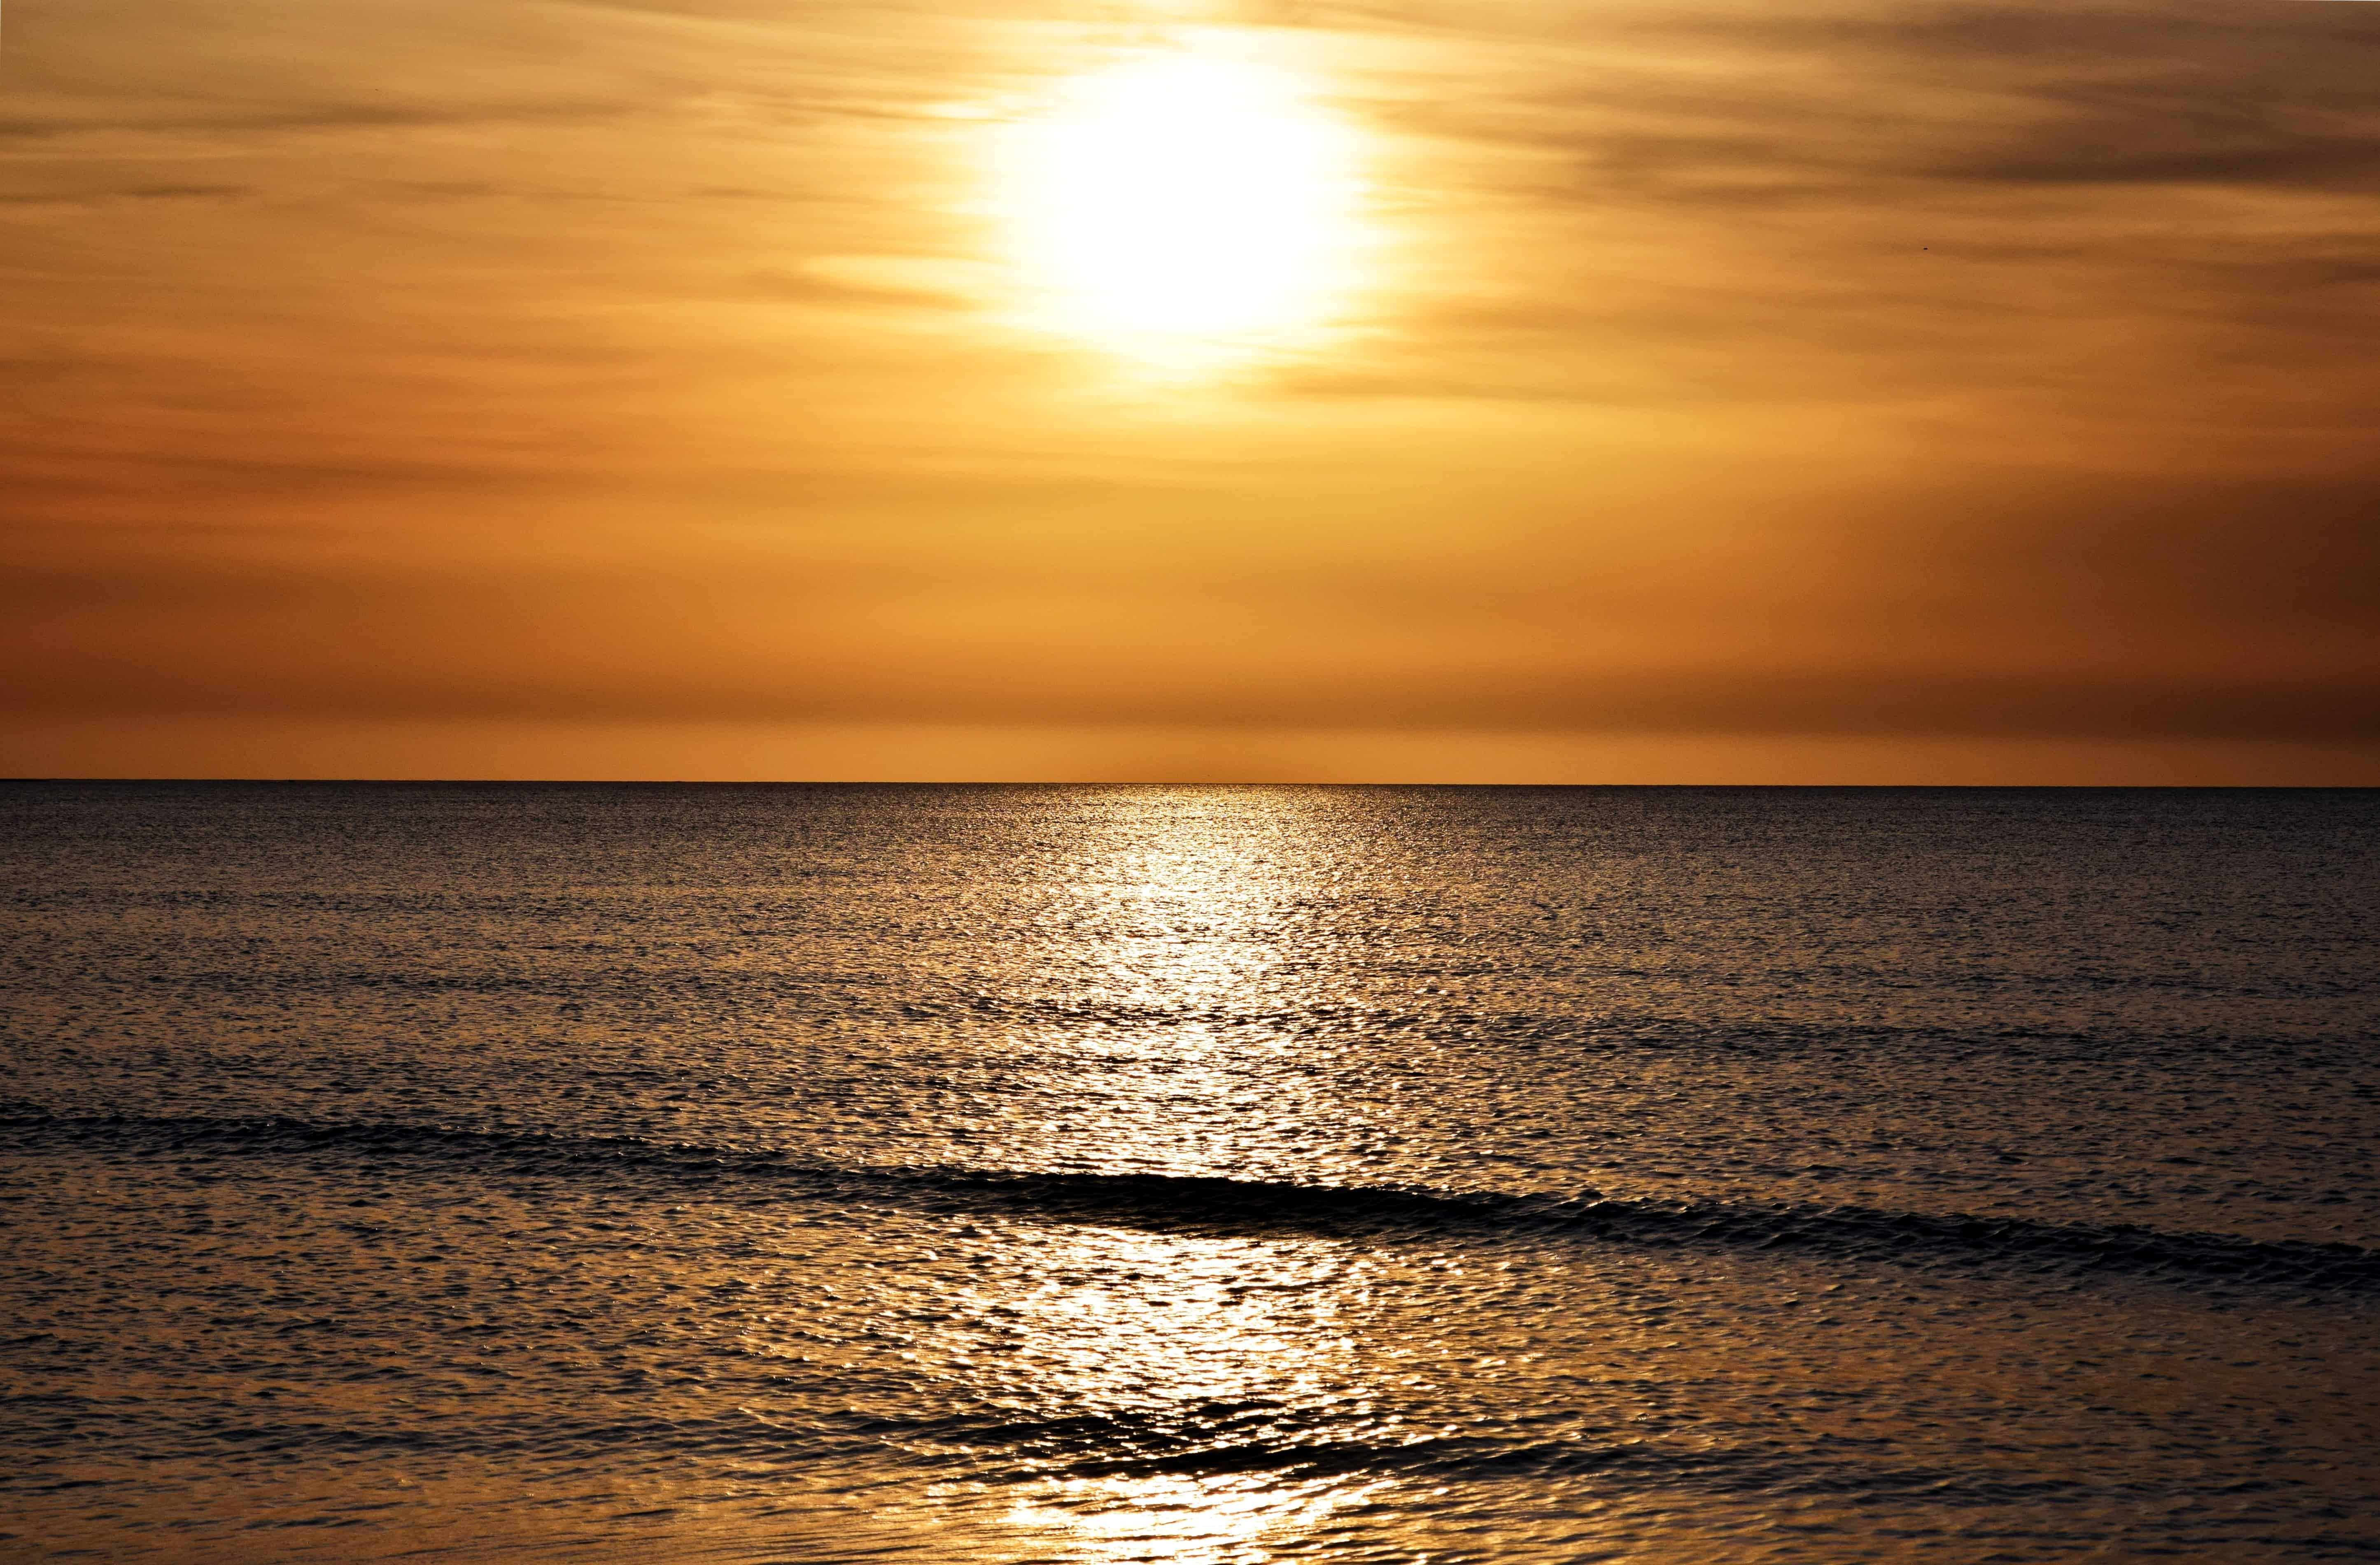 Free picture: water, outdoor, sky, beach, sunset, ocean, evening ...